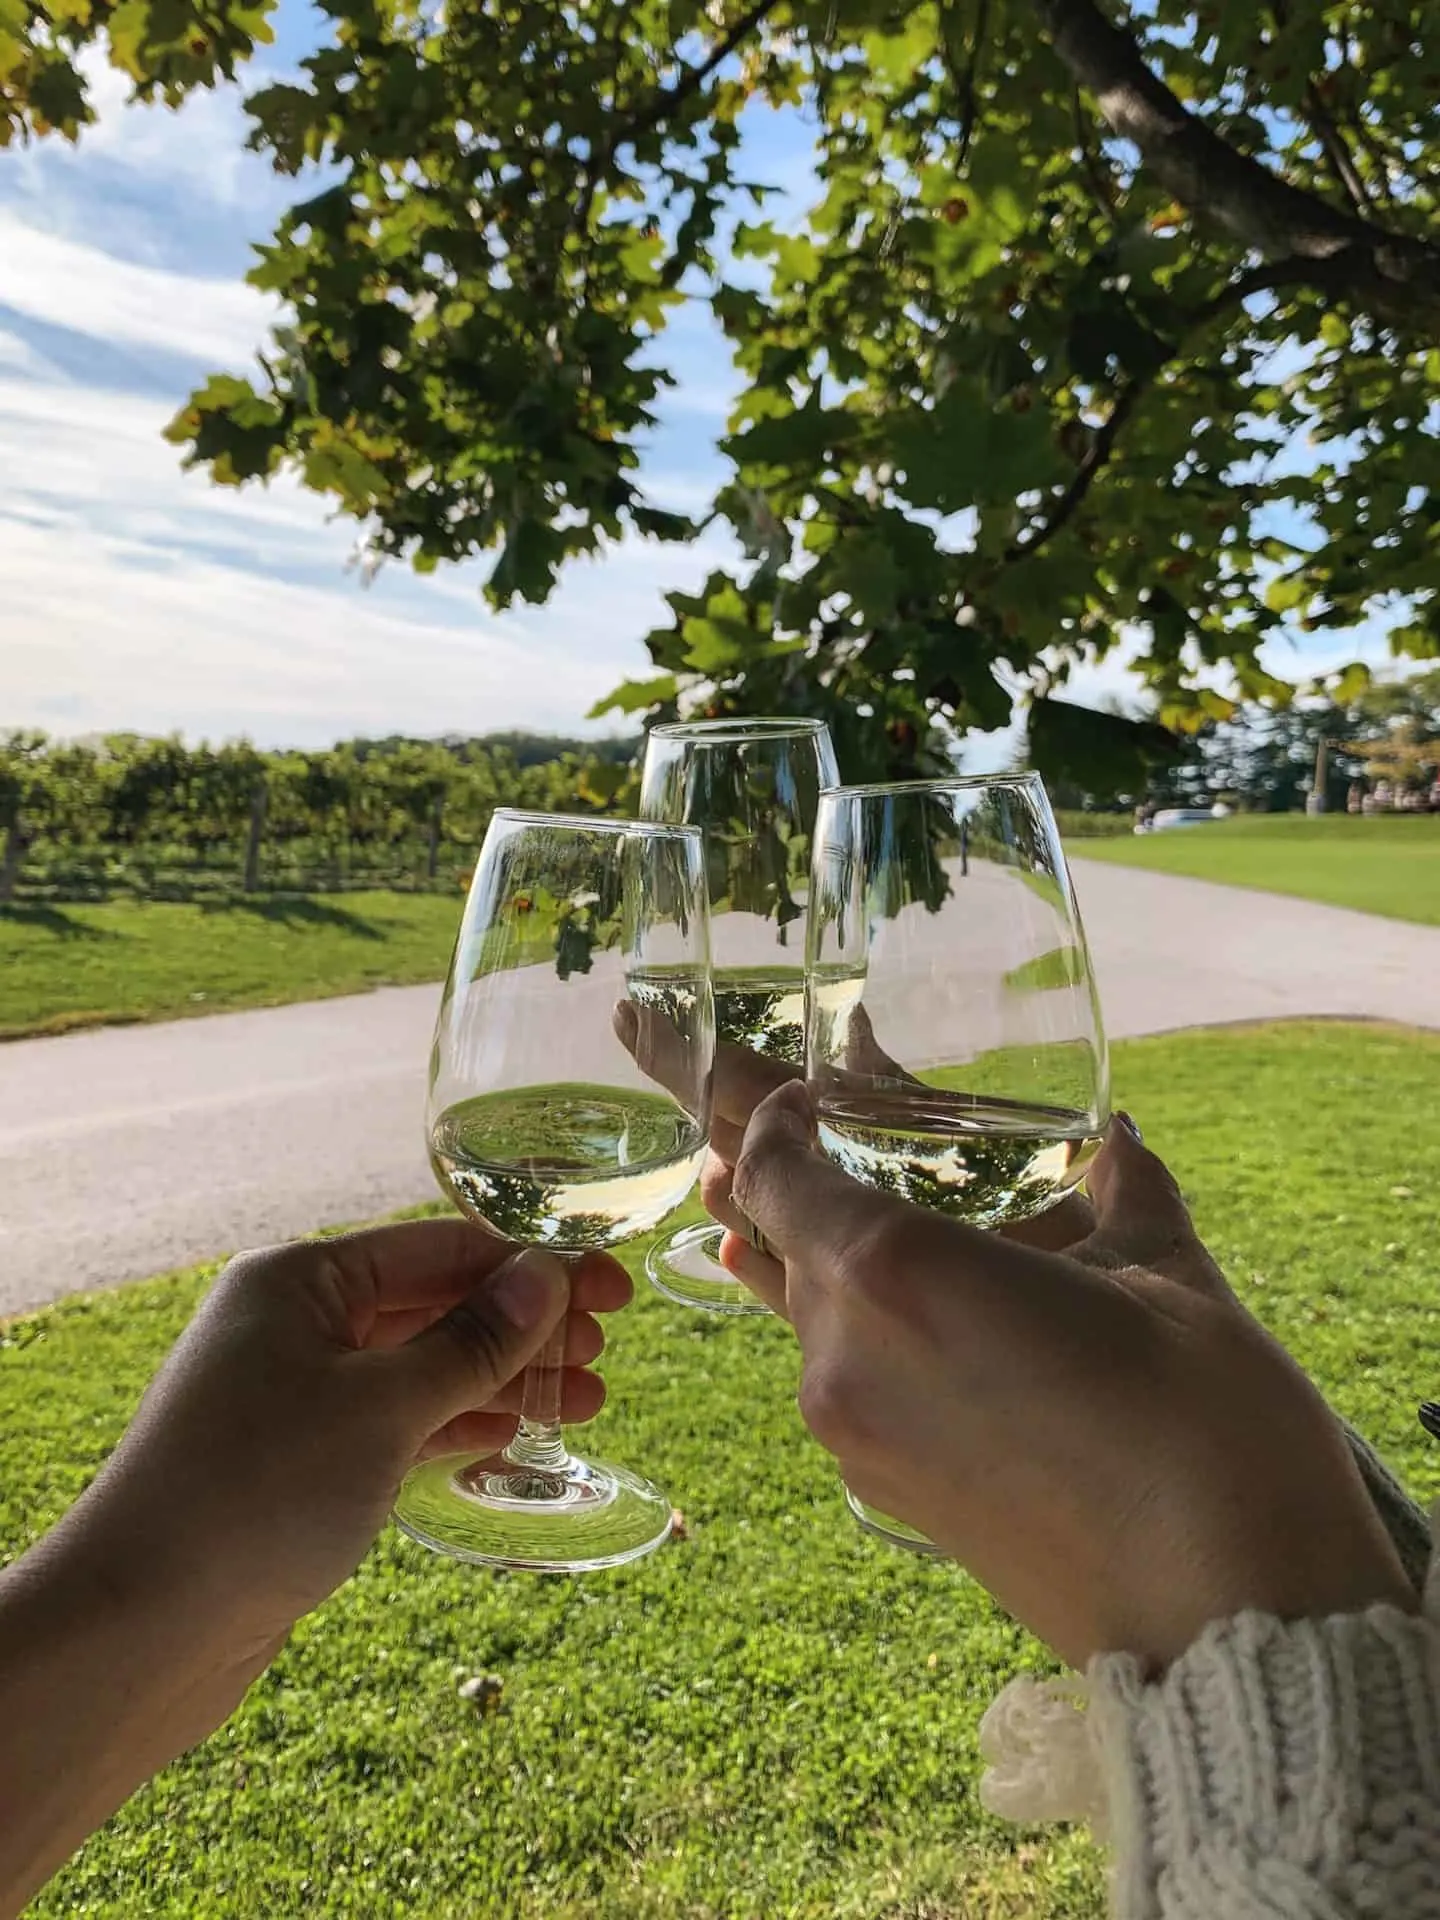 Peller Estates Winery in Niagara-on-the-Lake, Ontario